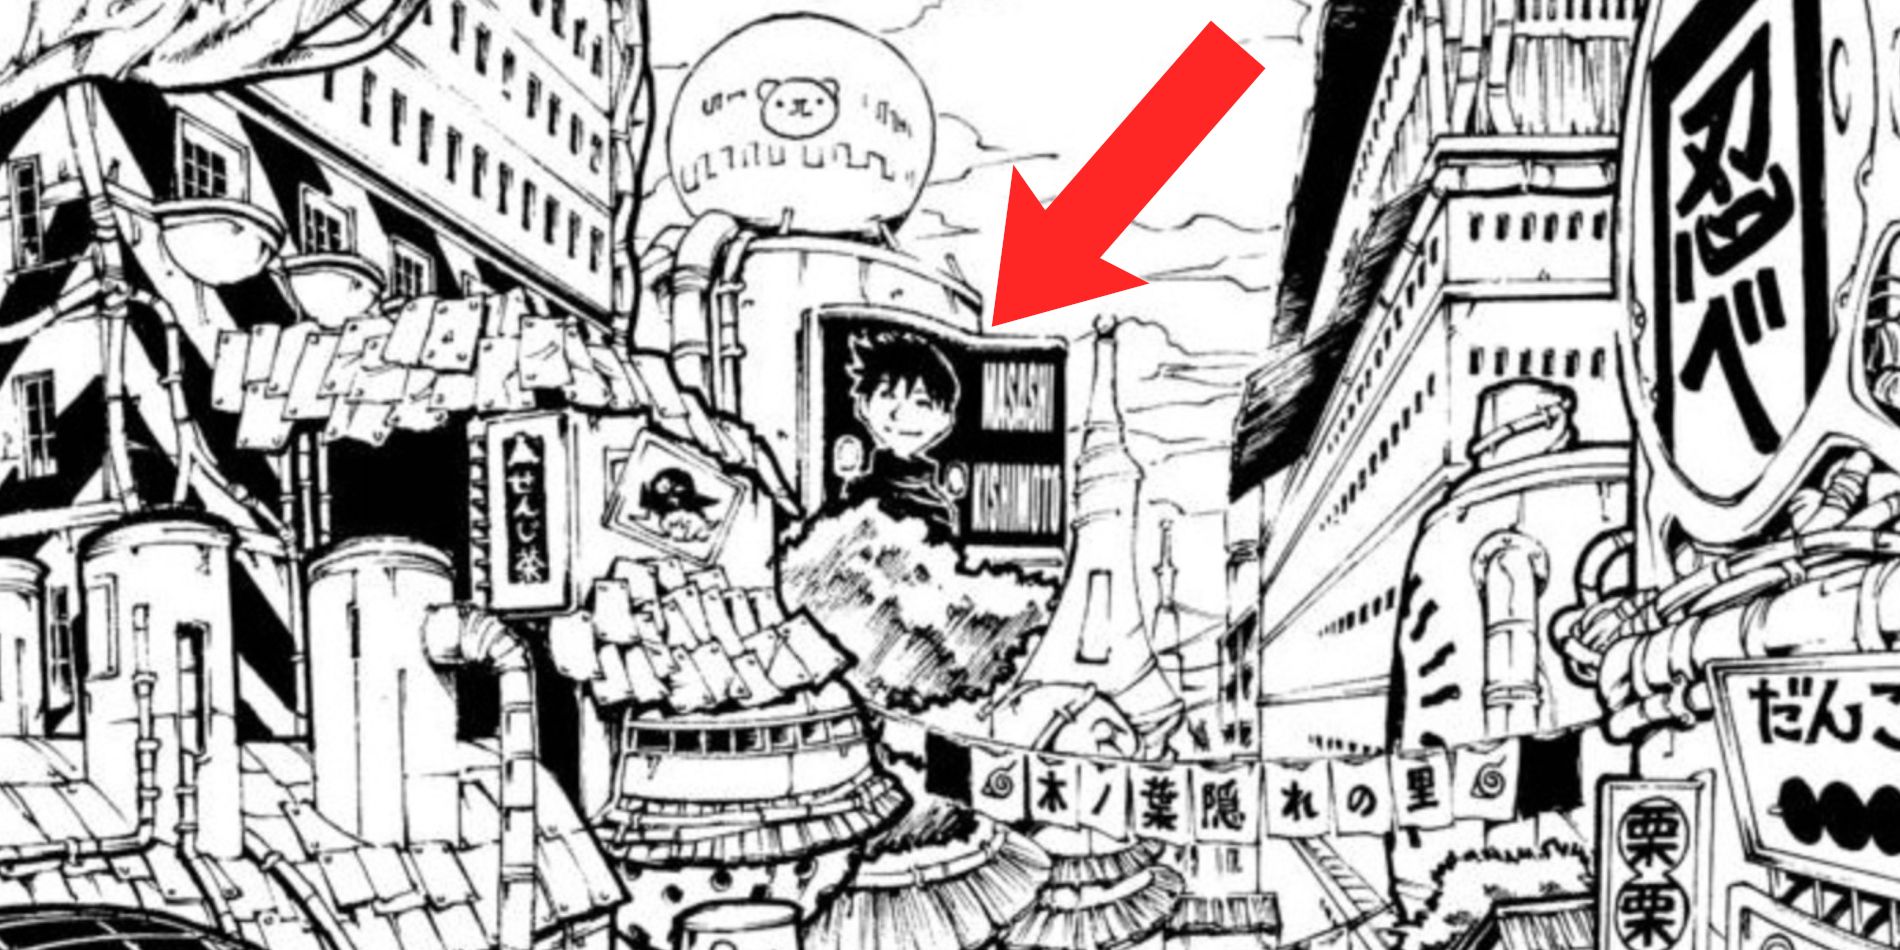 Gambar dari bab 3 manga Naruto menunjukkan panel bangunan besar desa Konoha dan papan reklame dengan pencipta seri Masashi Kishimoto di atasnya